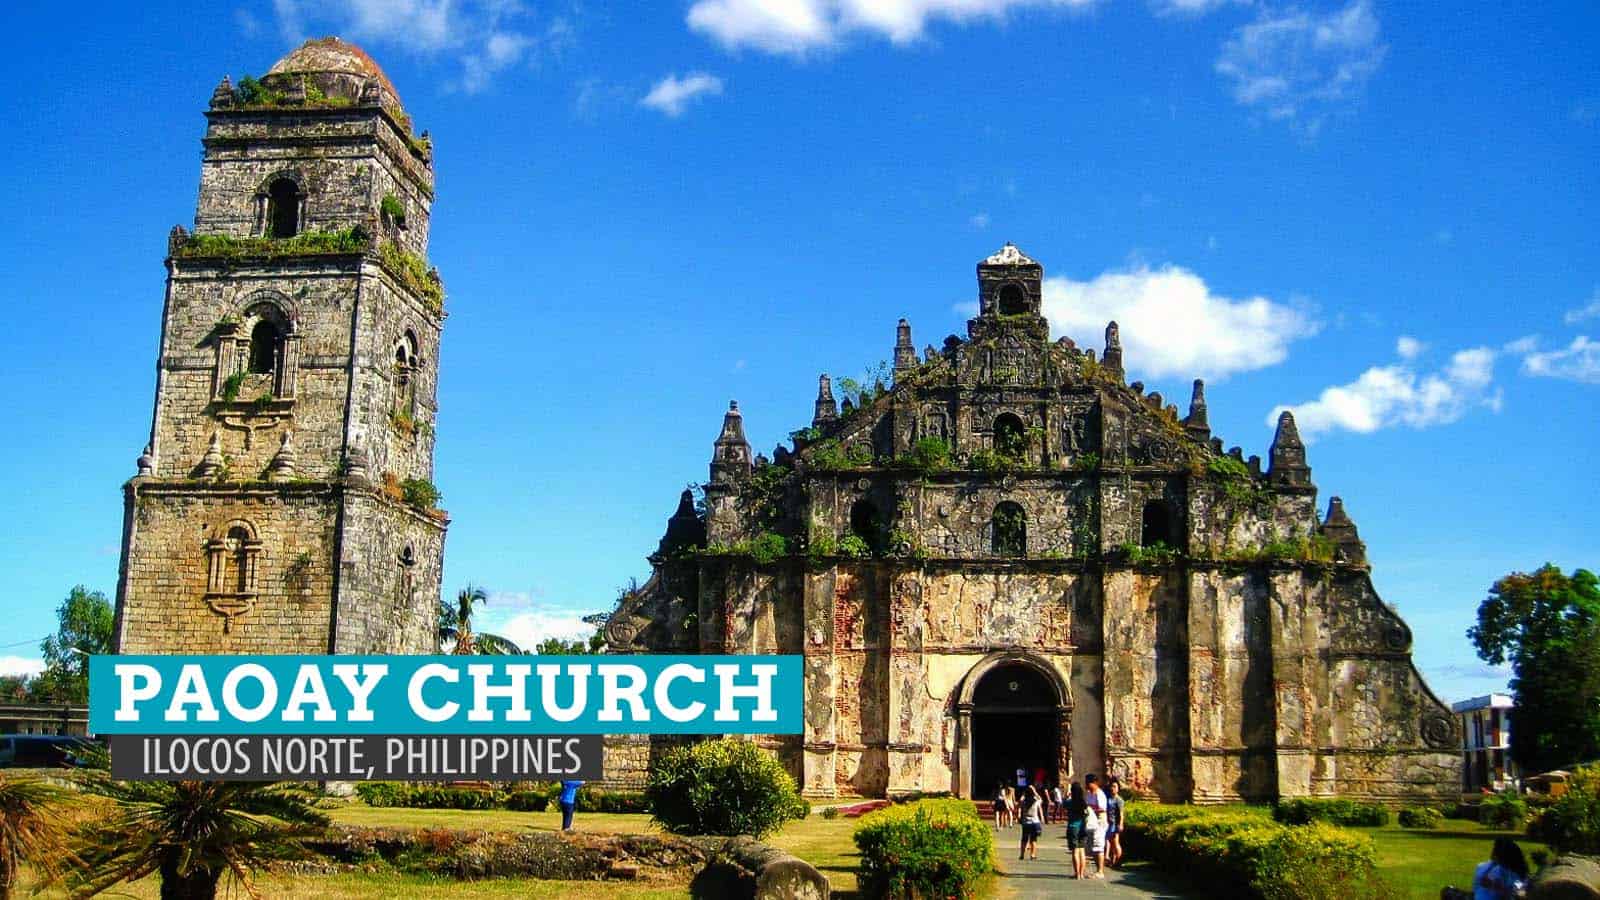 Paoay Church: A UNESCO Heritage Site in Ilocos Norte, Philippines